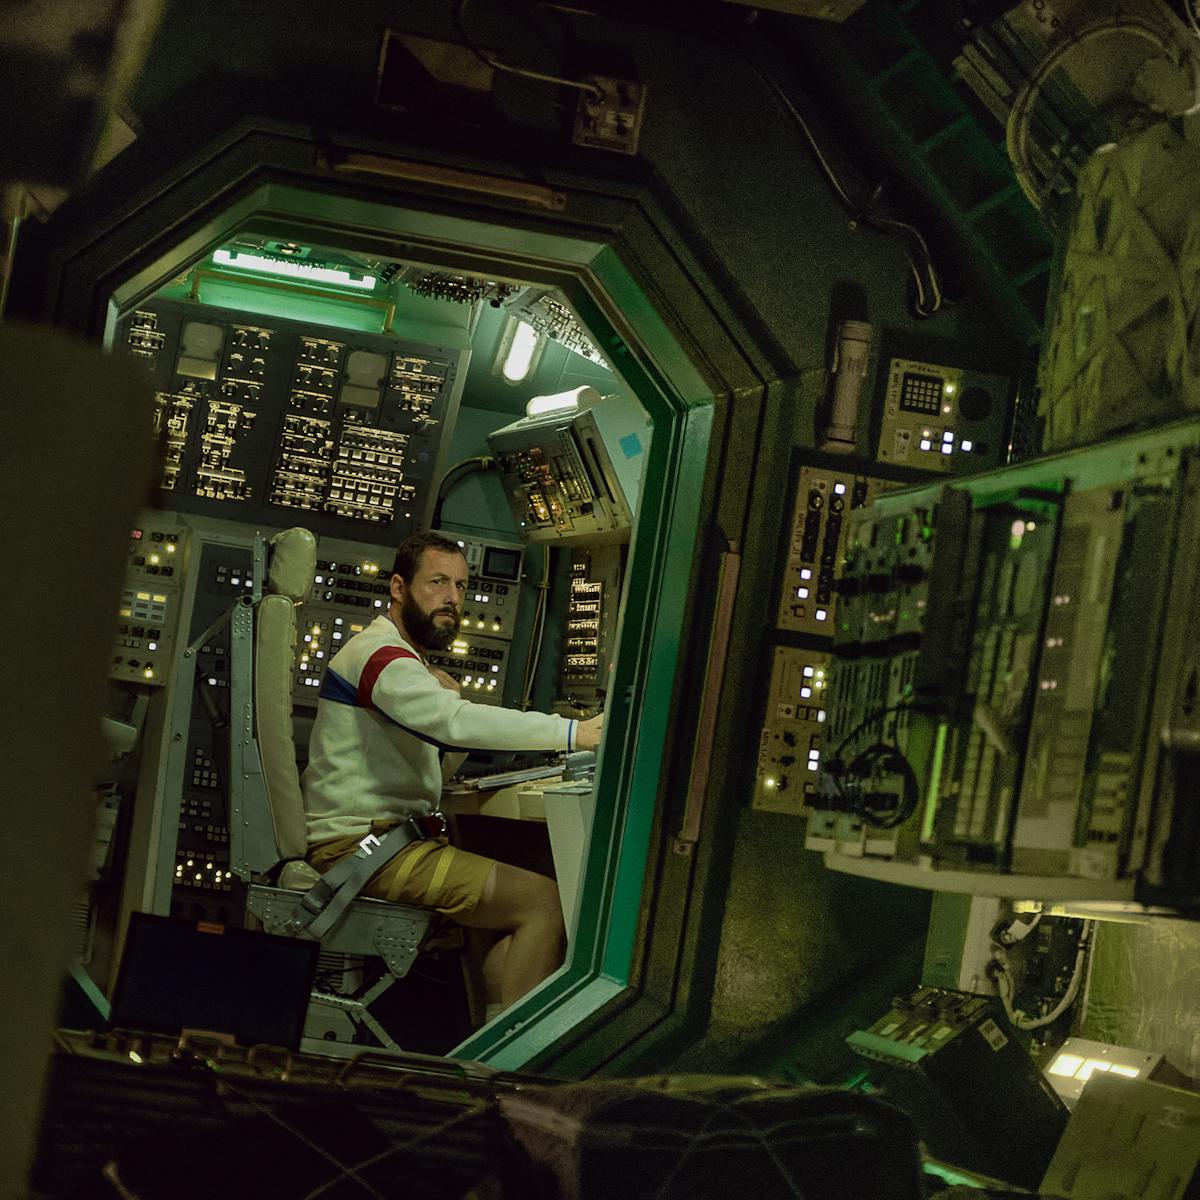 Jakub (Adam Sandler) works a console in a spaceship, lit by green light.